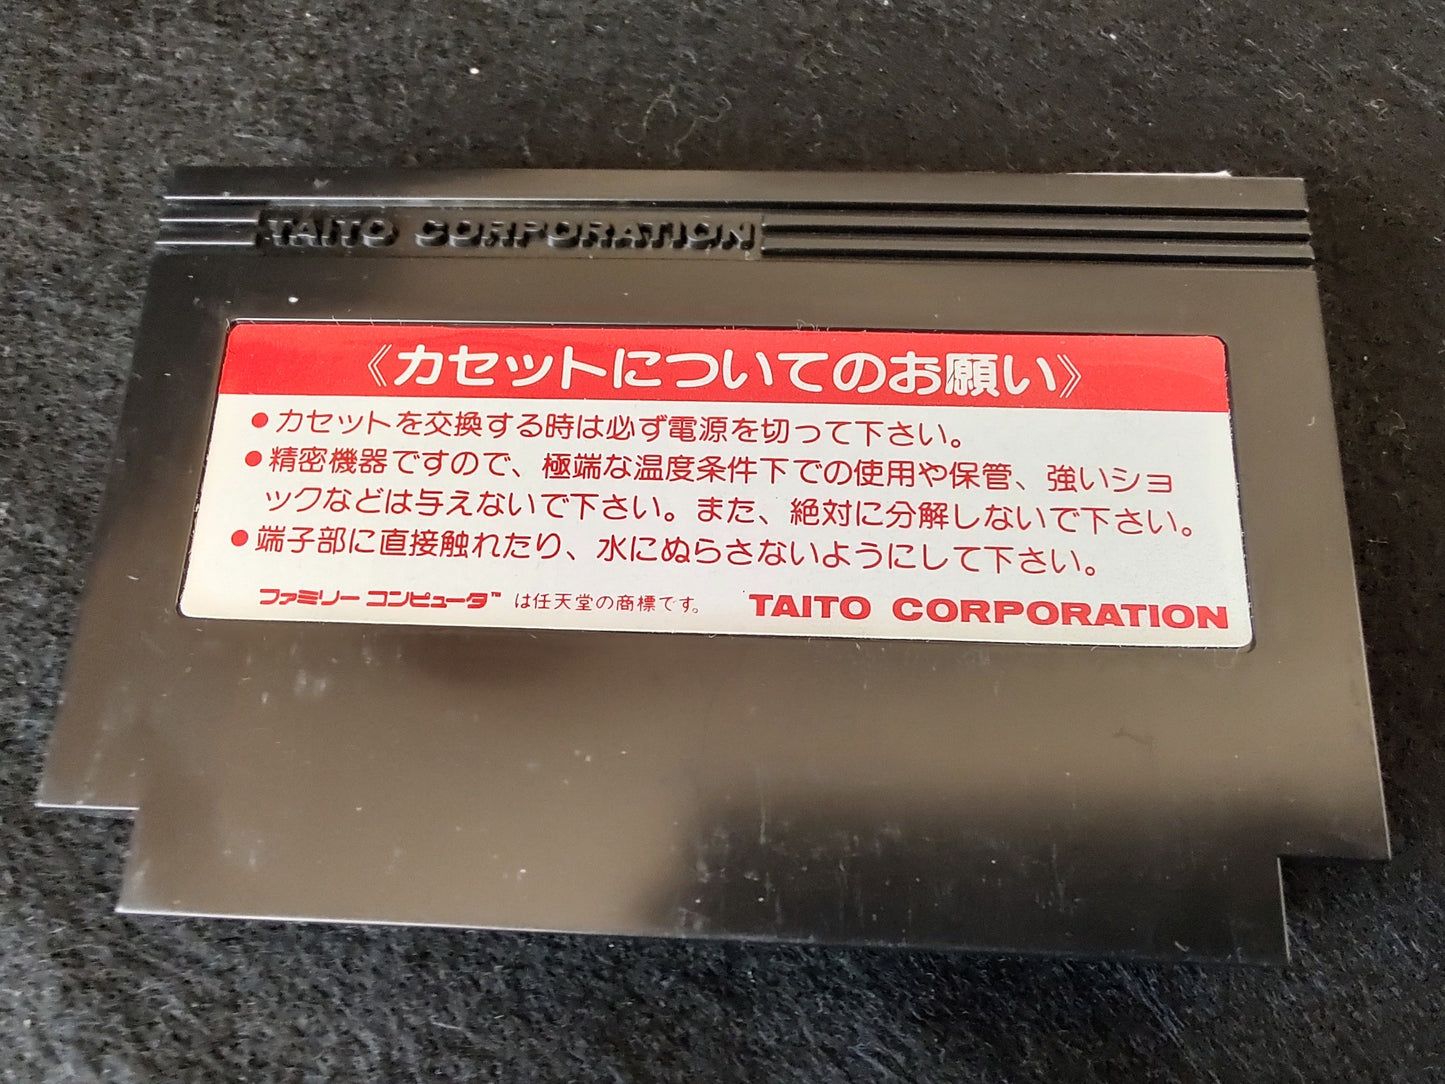 Arkanoid 2 Nintendo Famicom game cartridge, Manual, Paddle controller set-f0204-